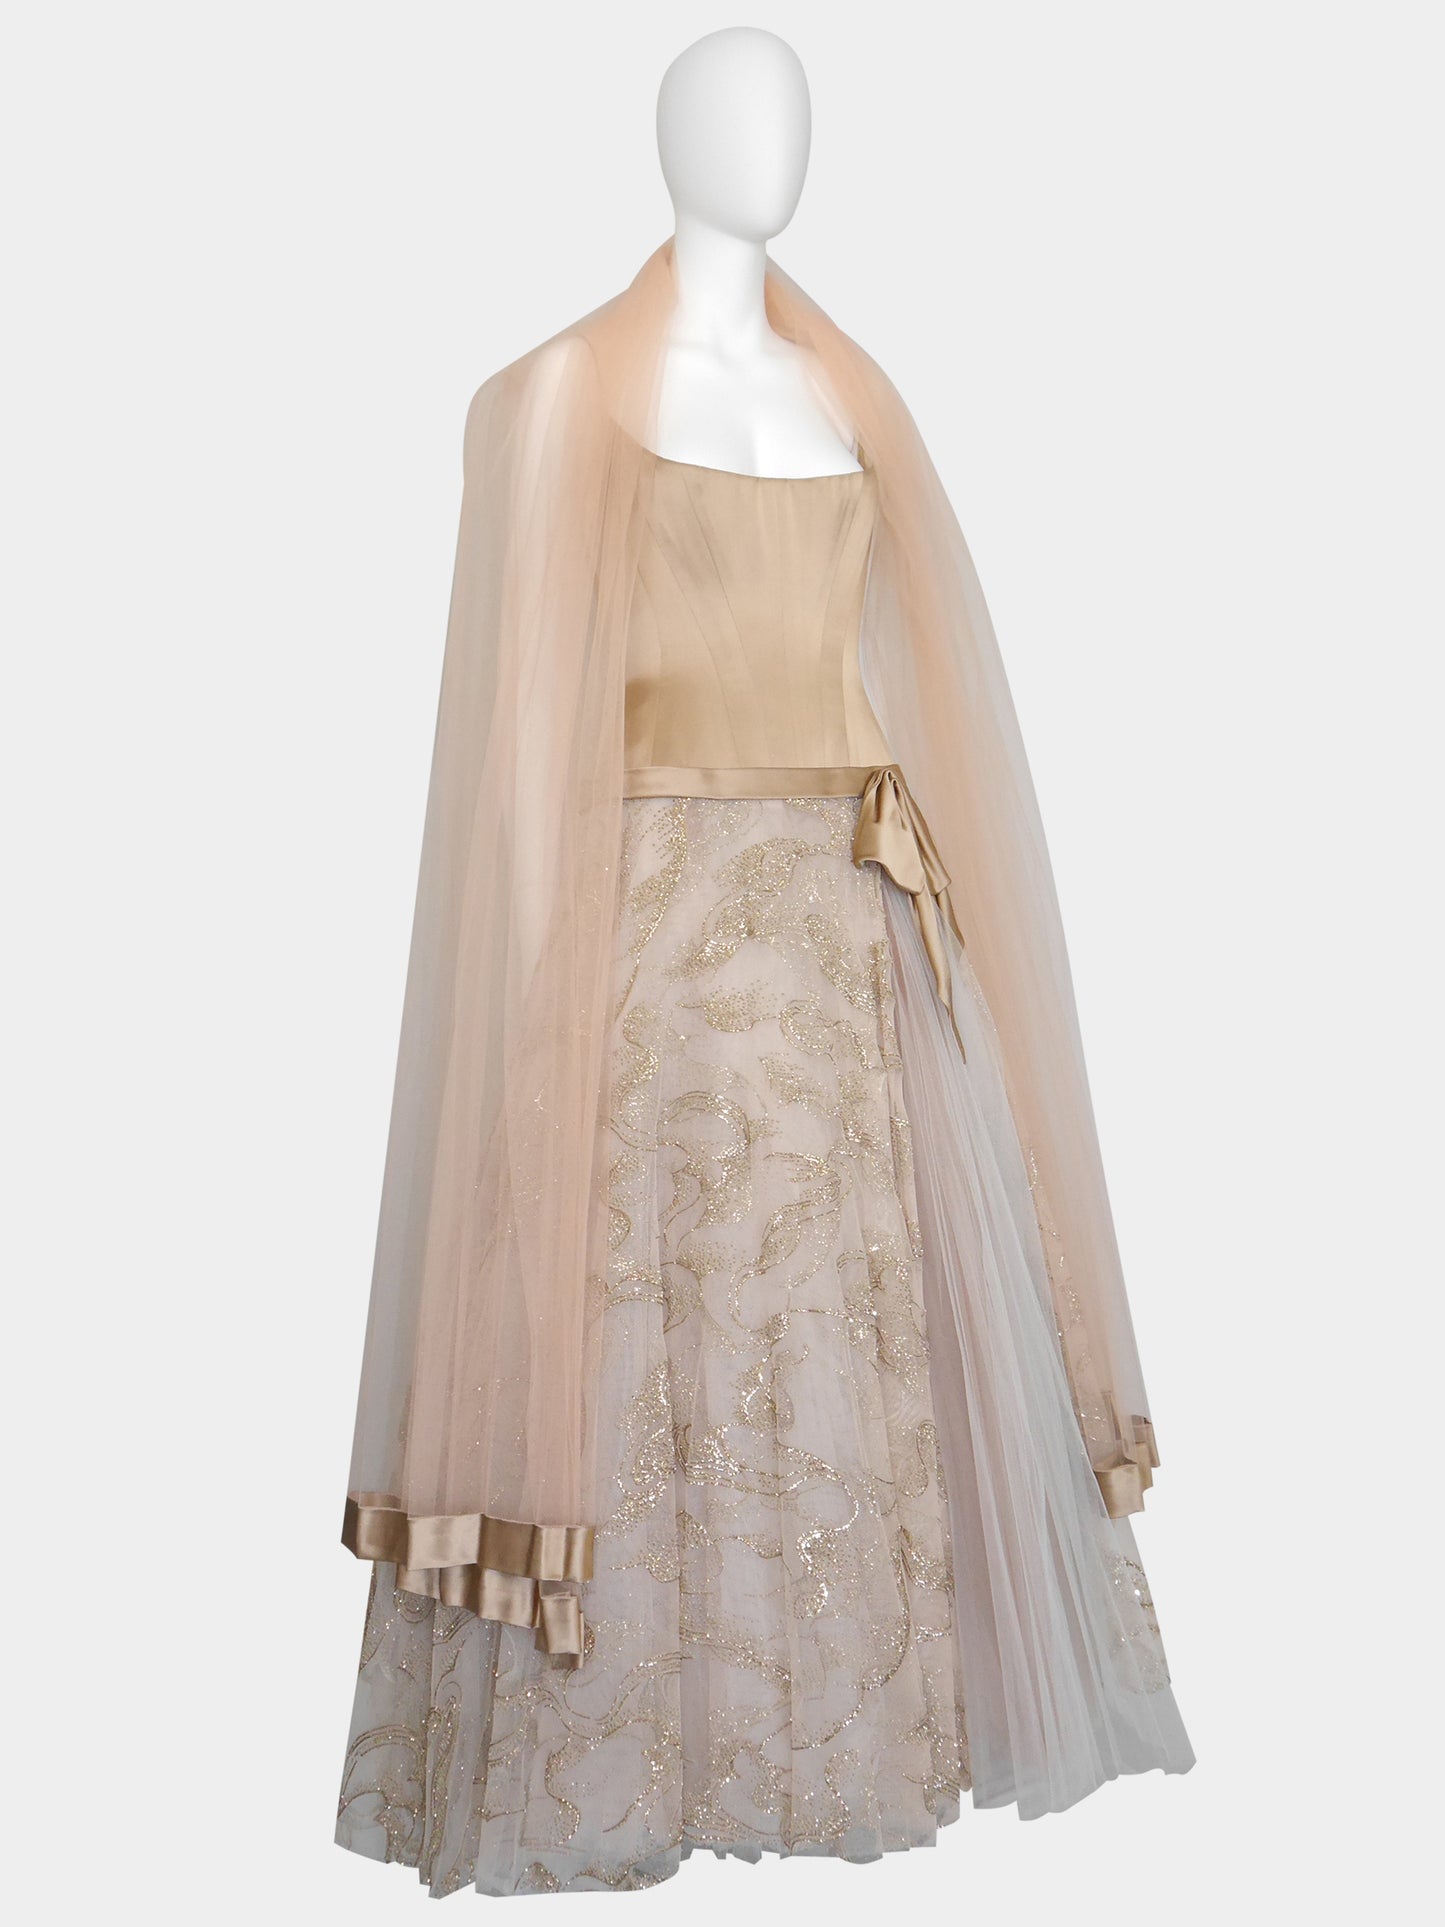 NINA RICCI 1990s Vintage Princess Ball Gown Evening Dress w/ Stole